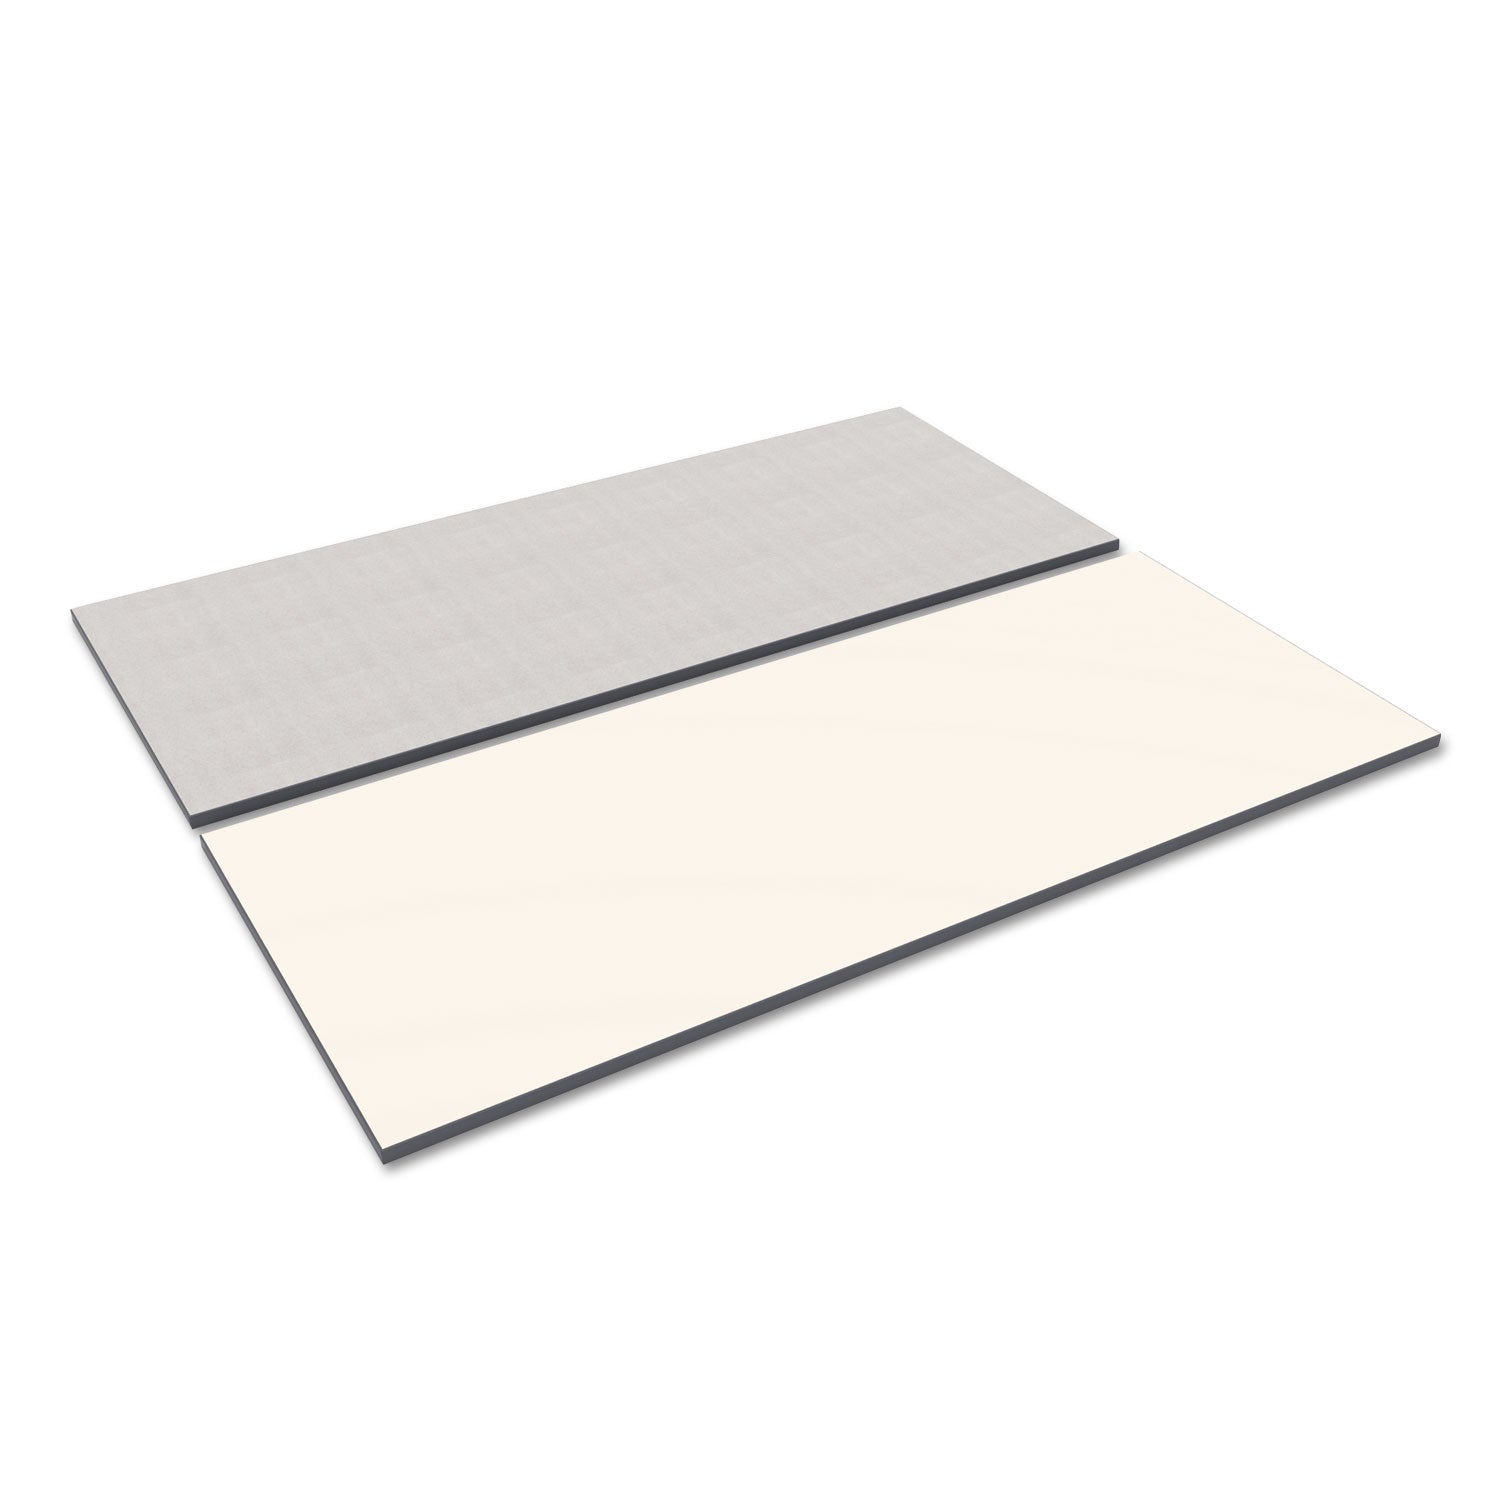 reversible-laminate-table-top-rectangular-715w-x-295d-white-gray_alett7230wg - 1